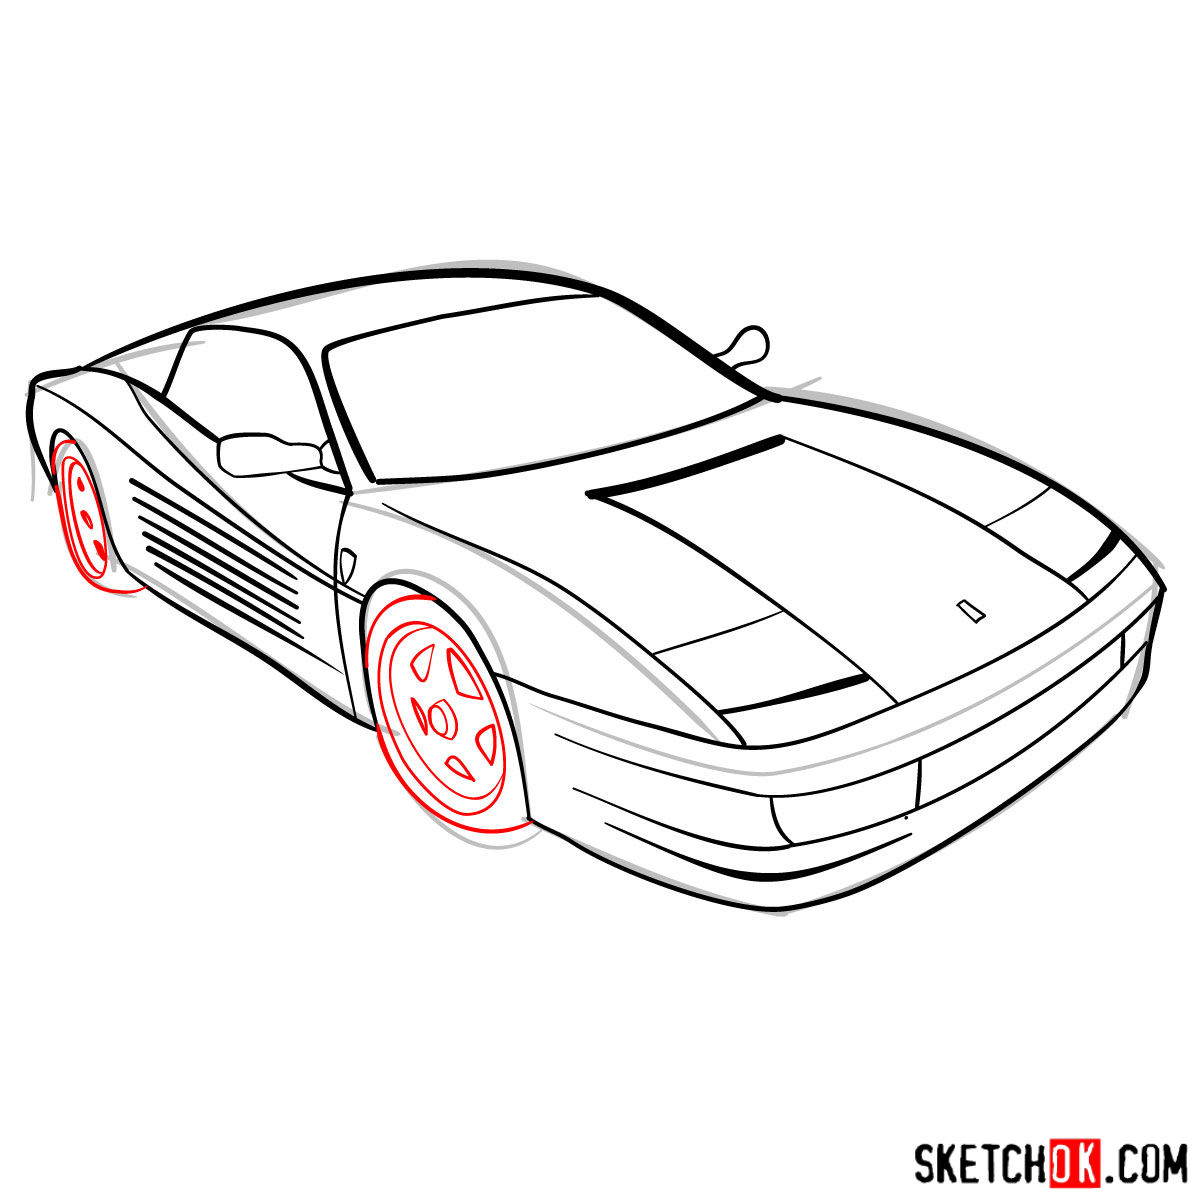 How to draw Ferrari Testarossa supercar - step 08